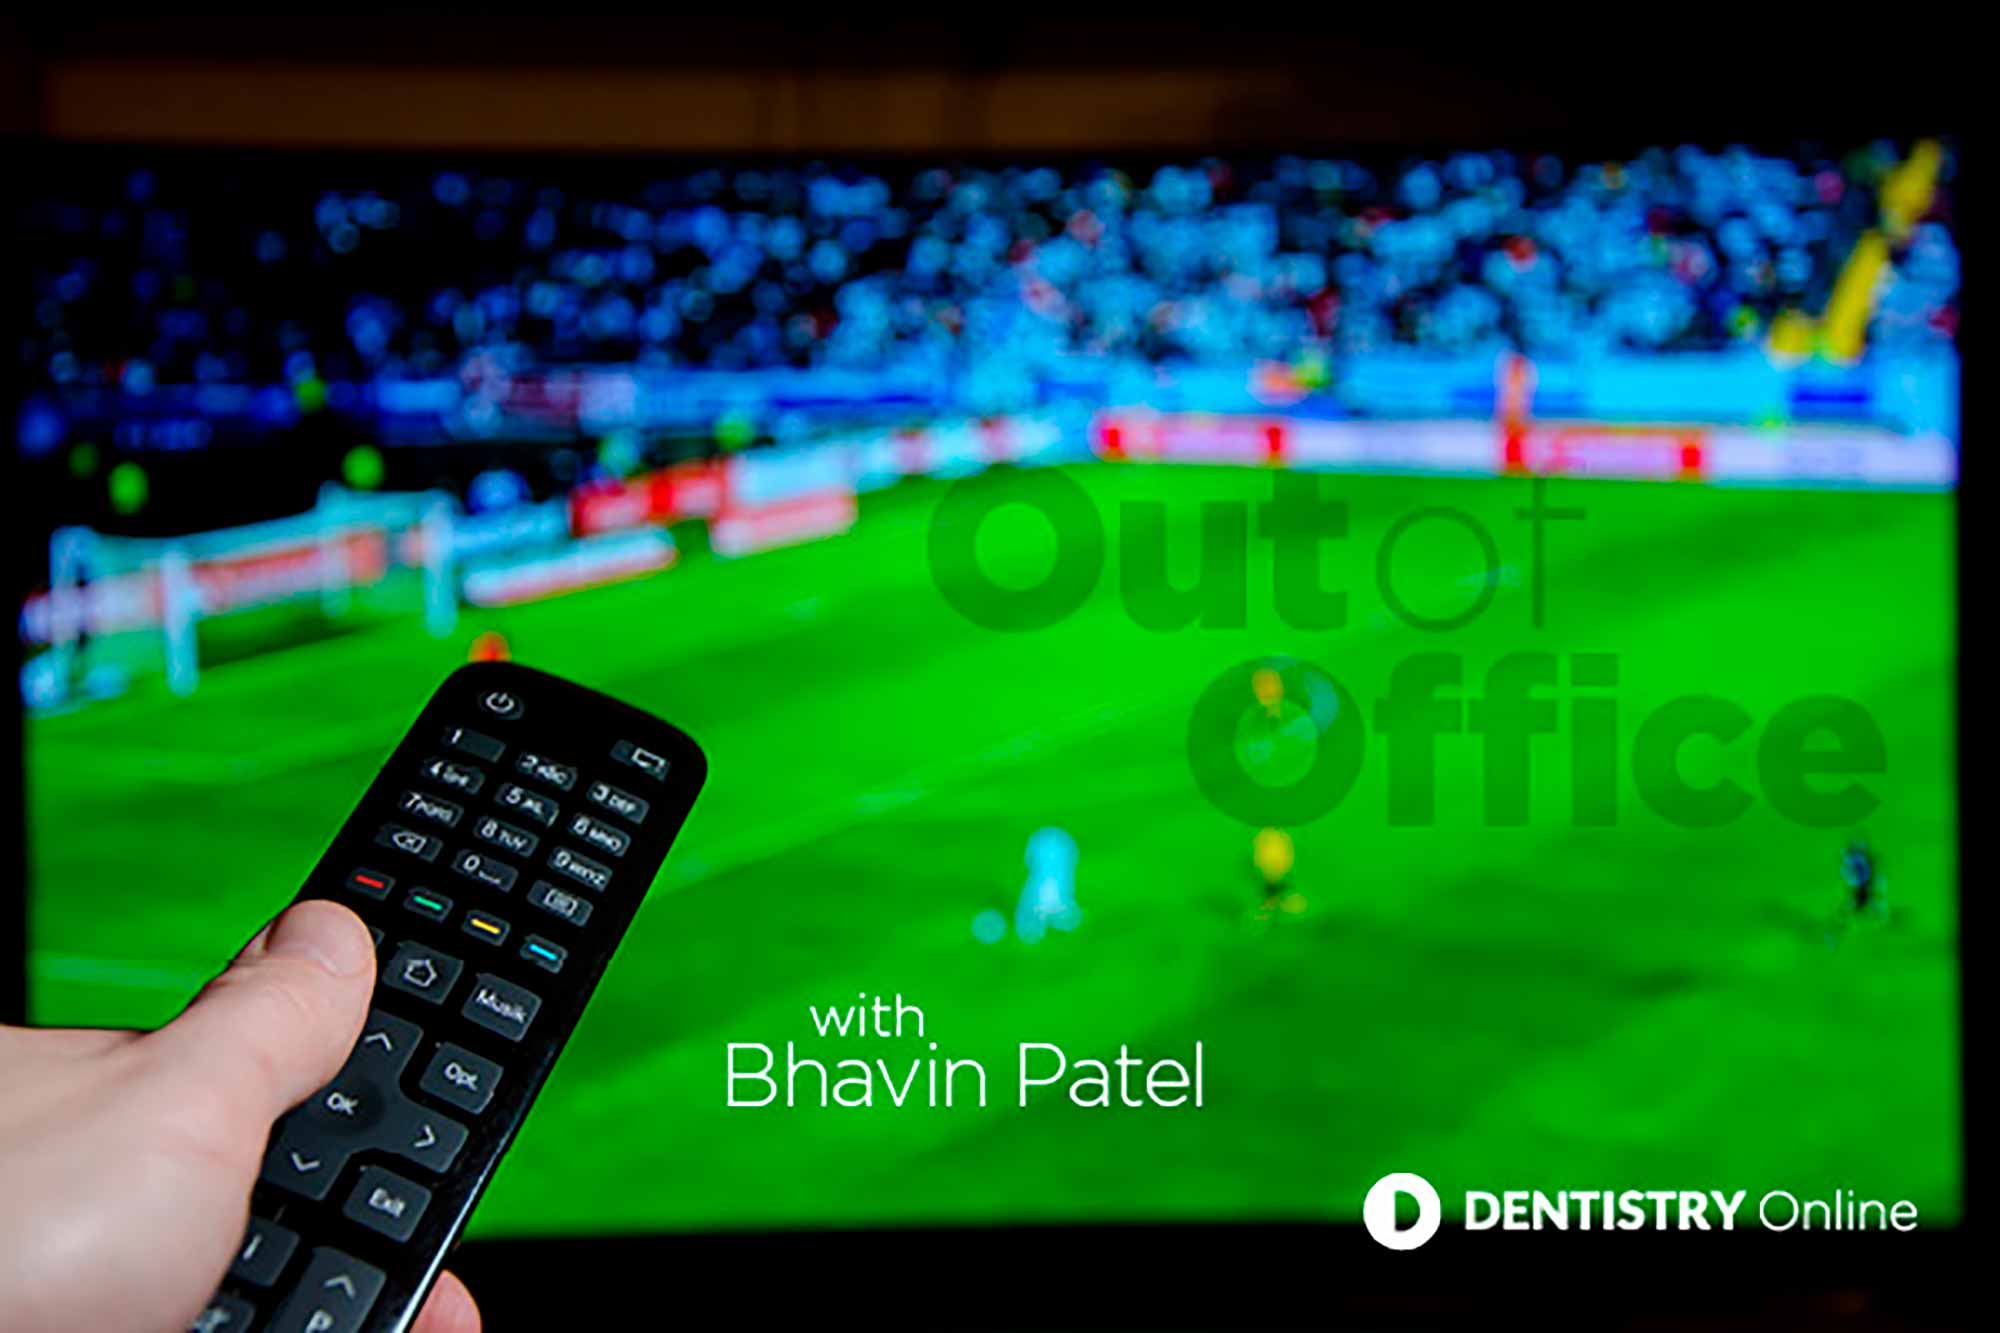 Bhavin Patel on watching TV